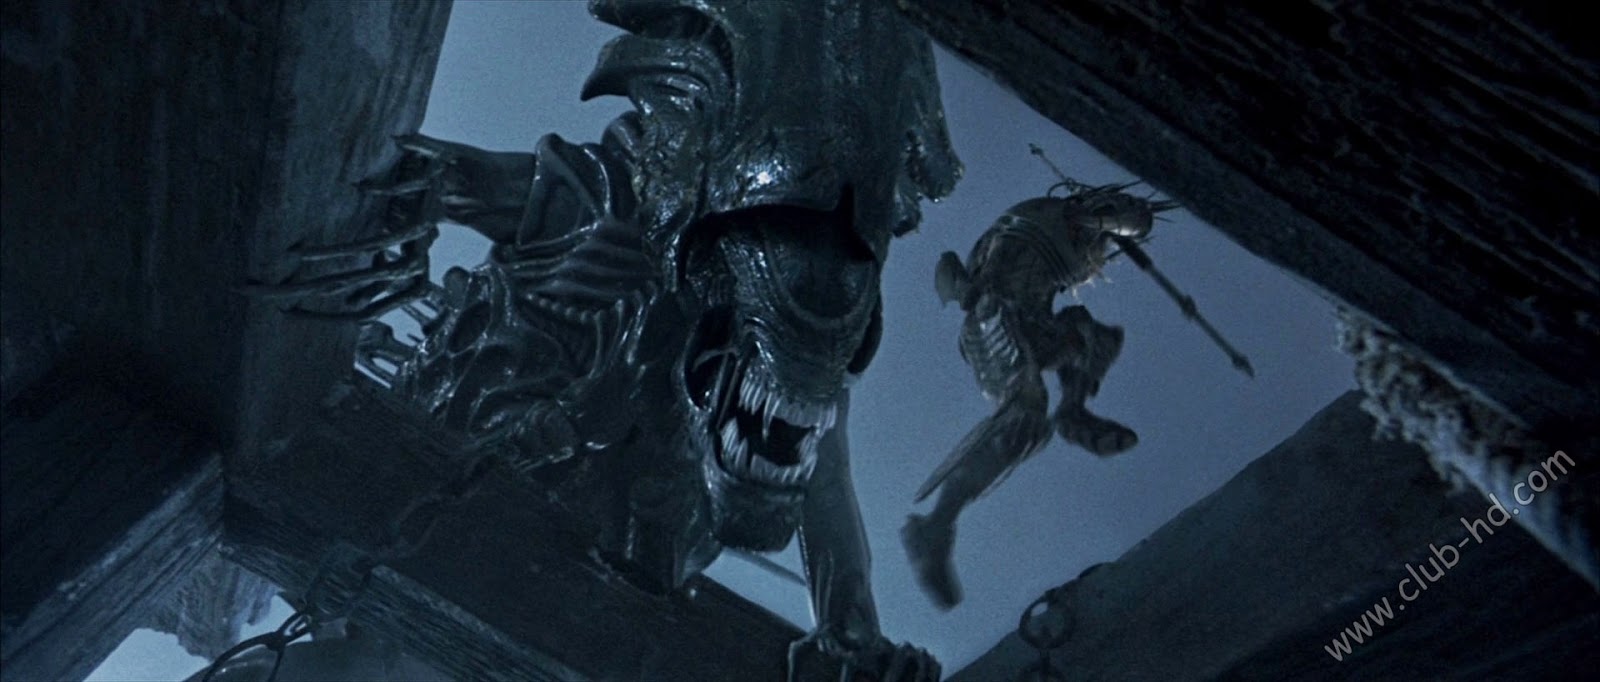 Alien_vs_Predator_UNRATED_CAPTURA-14.jpg